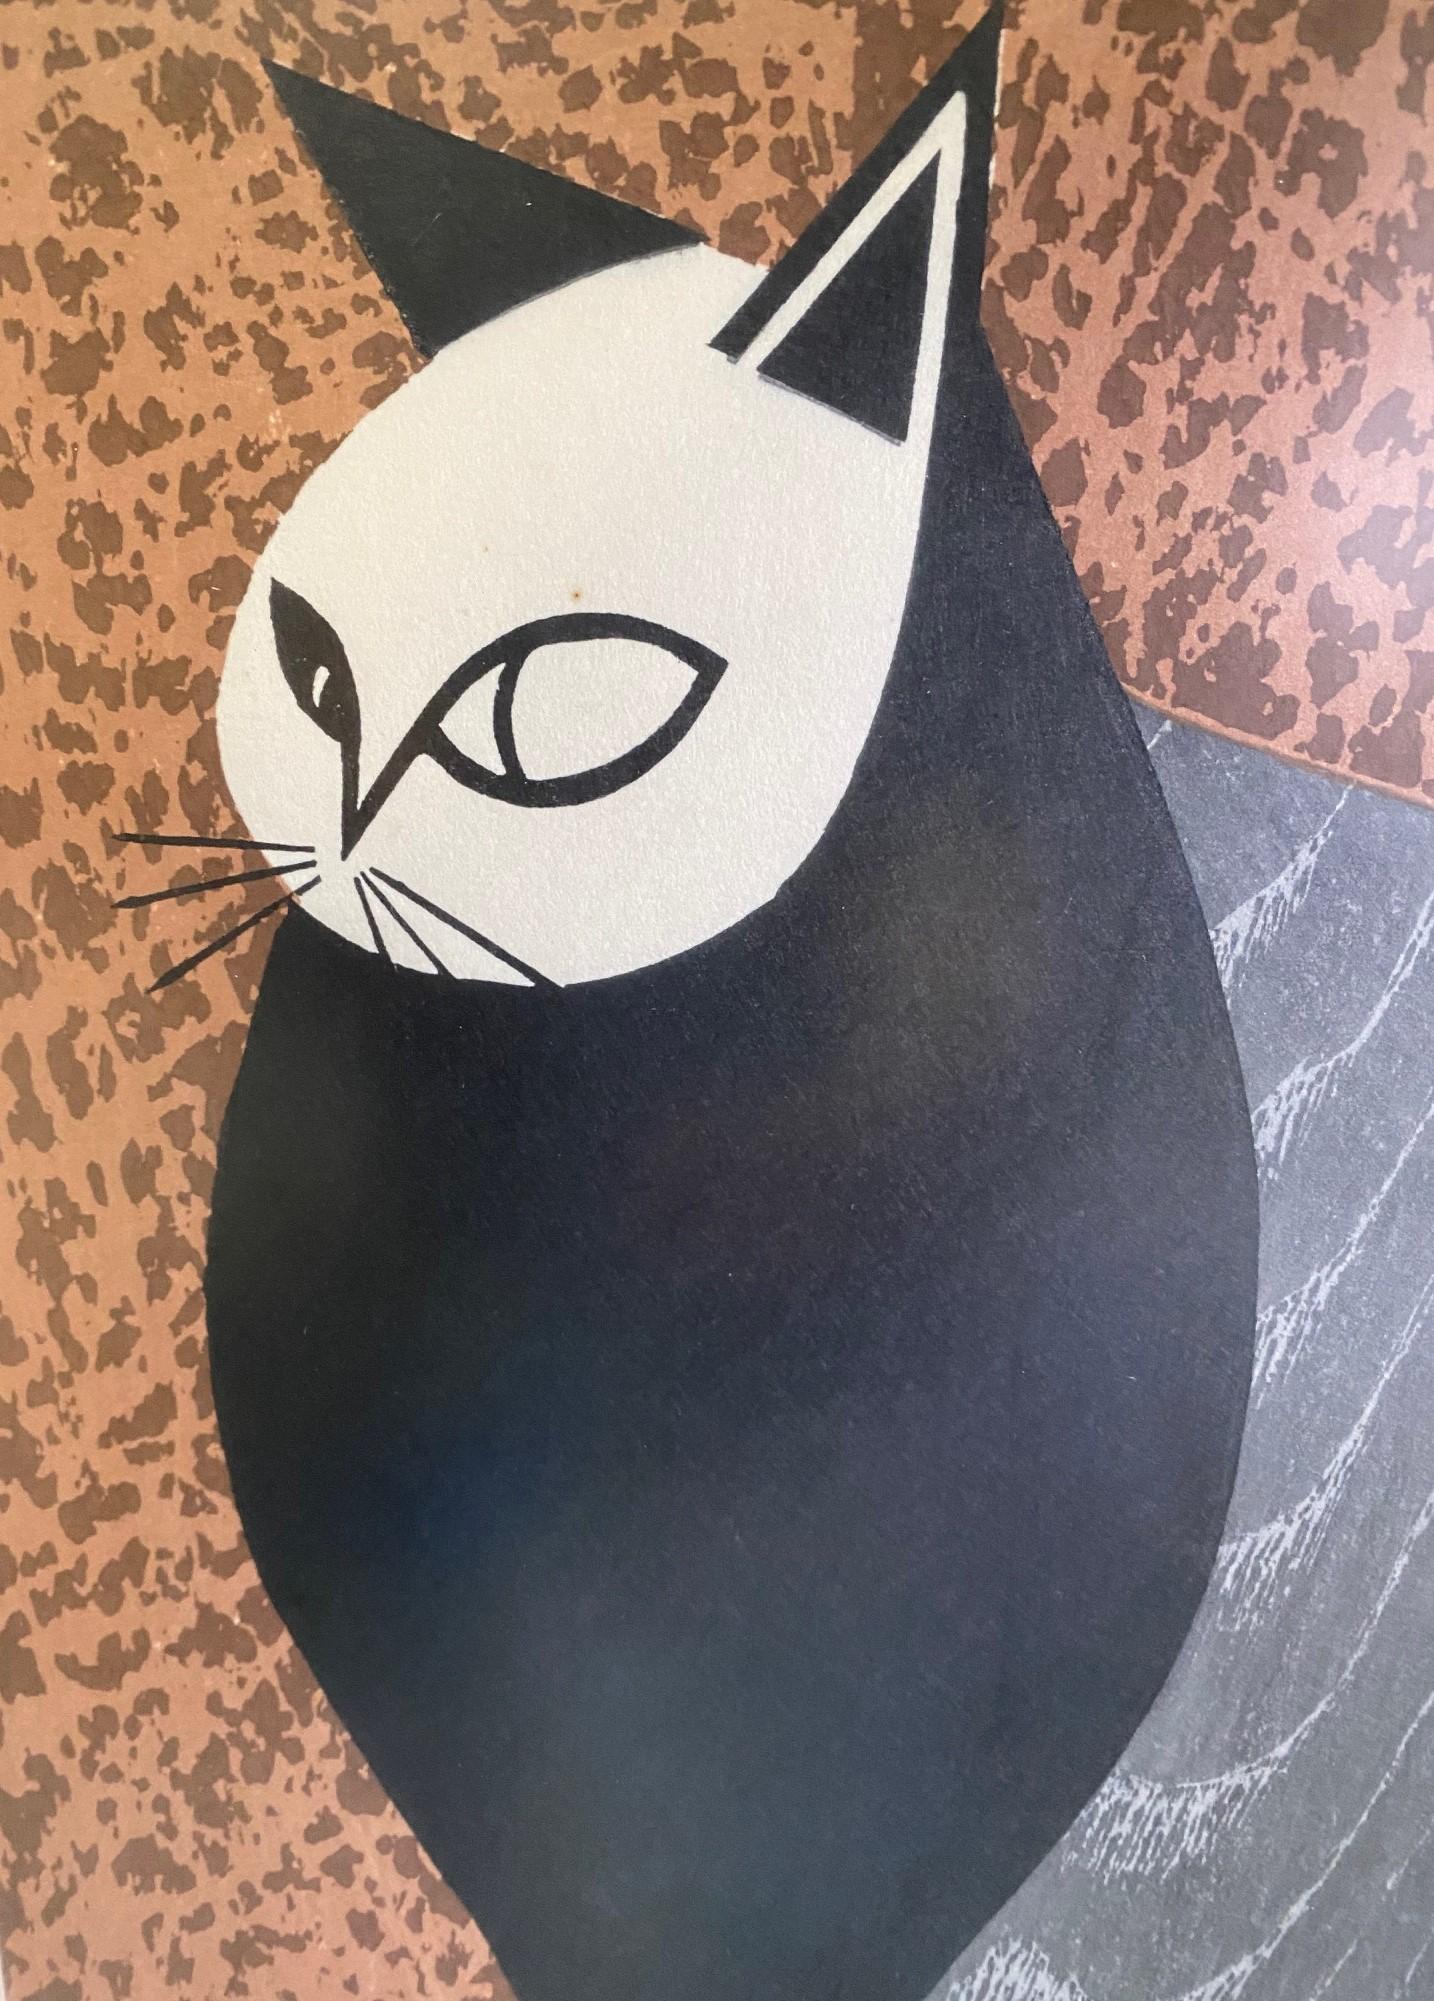 Showa Kiyoshi Saito Signed Stamped Japanese Woodblock Print of Pensive Cat, 1960